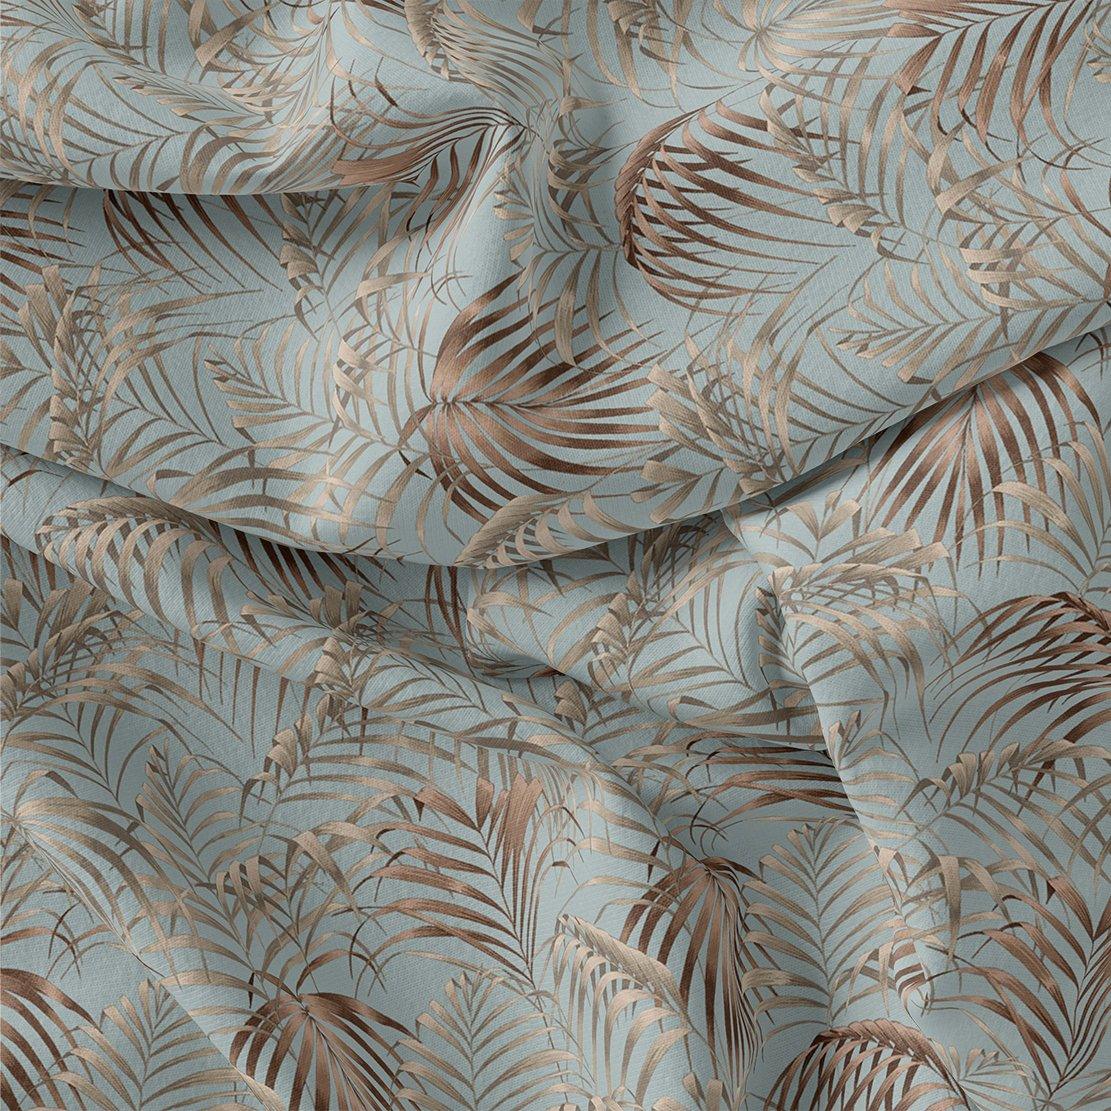 Tropical Garden Leaves Digital Printed Fabric - Pure Georgette - FAB VOGUE Studio®